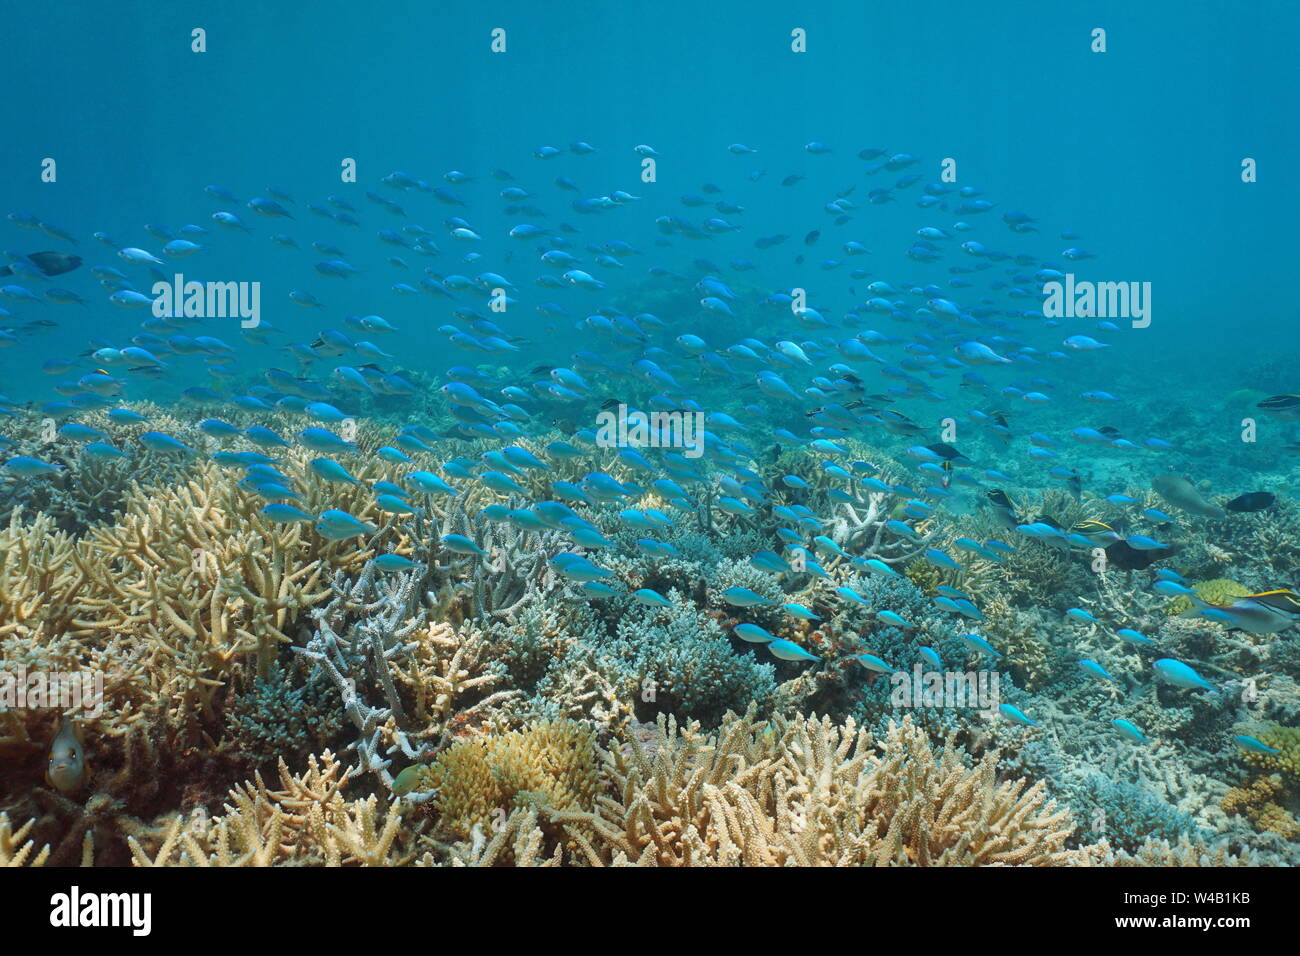 Underwater coral reef with a school of fish (damselfish Chromis viridis), lagoon of Grand-Terre island, New Caledonia, south Pacific ocean, Oceania Stock Photo